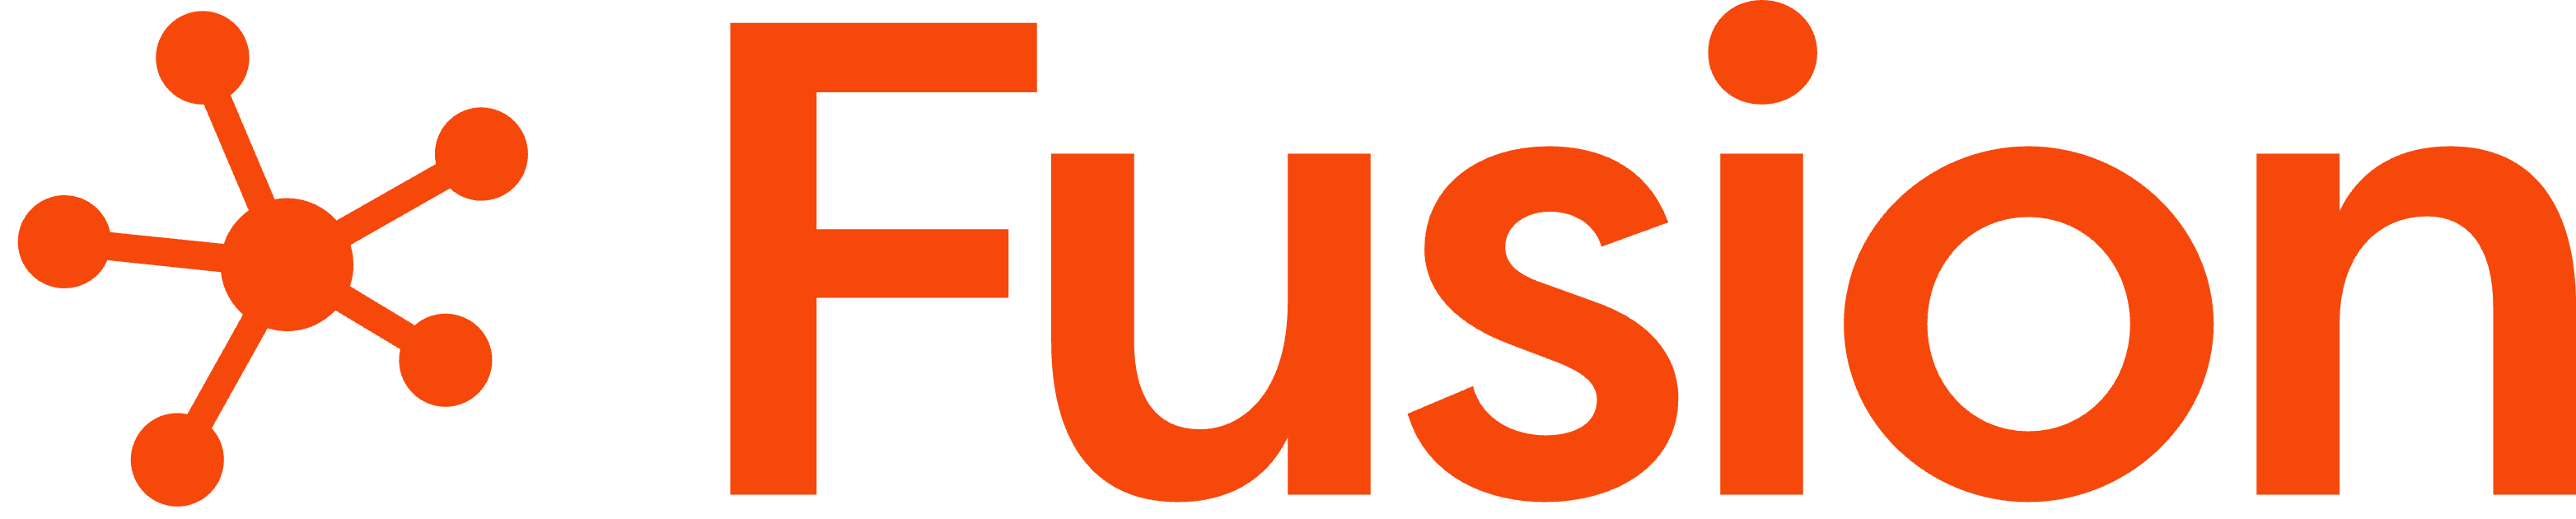 FusionOS AI logo